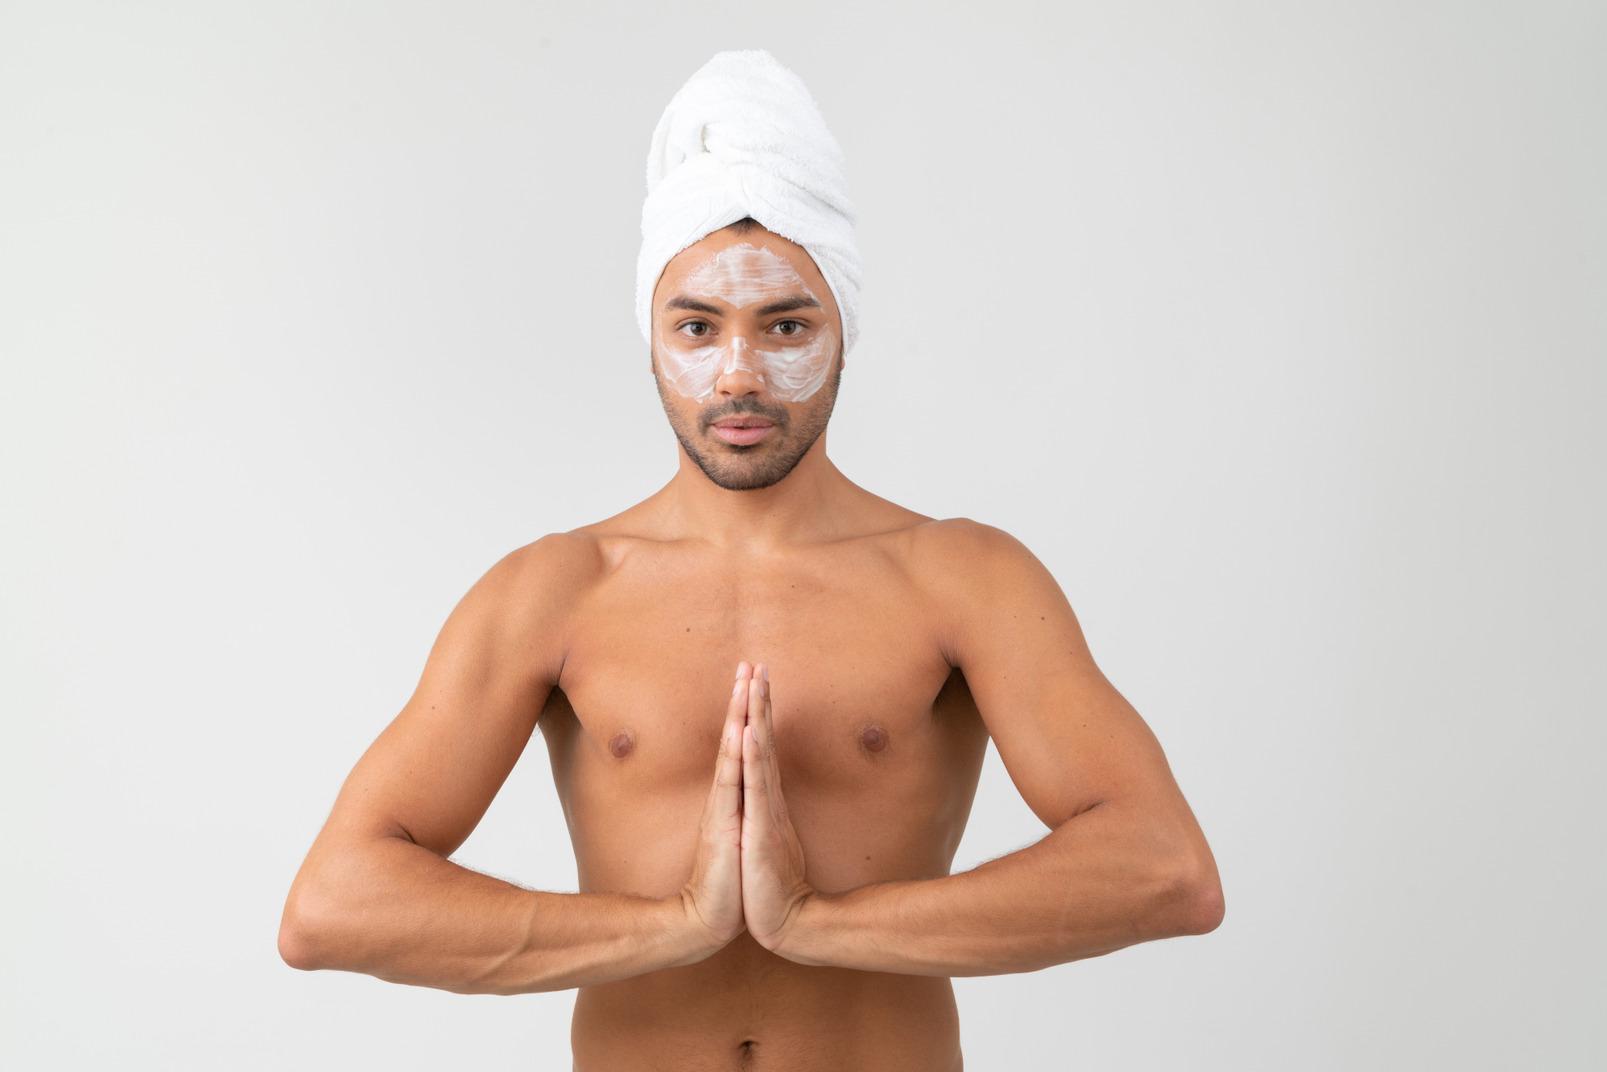 Namaste, beauty procedures!